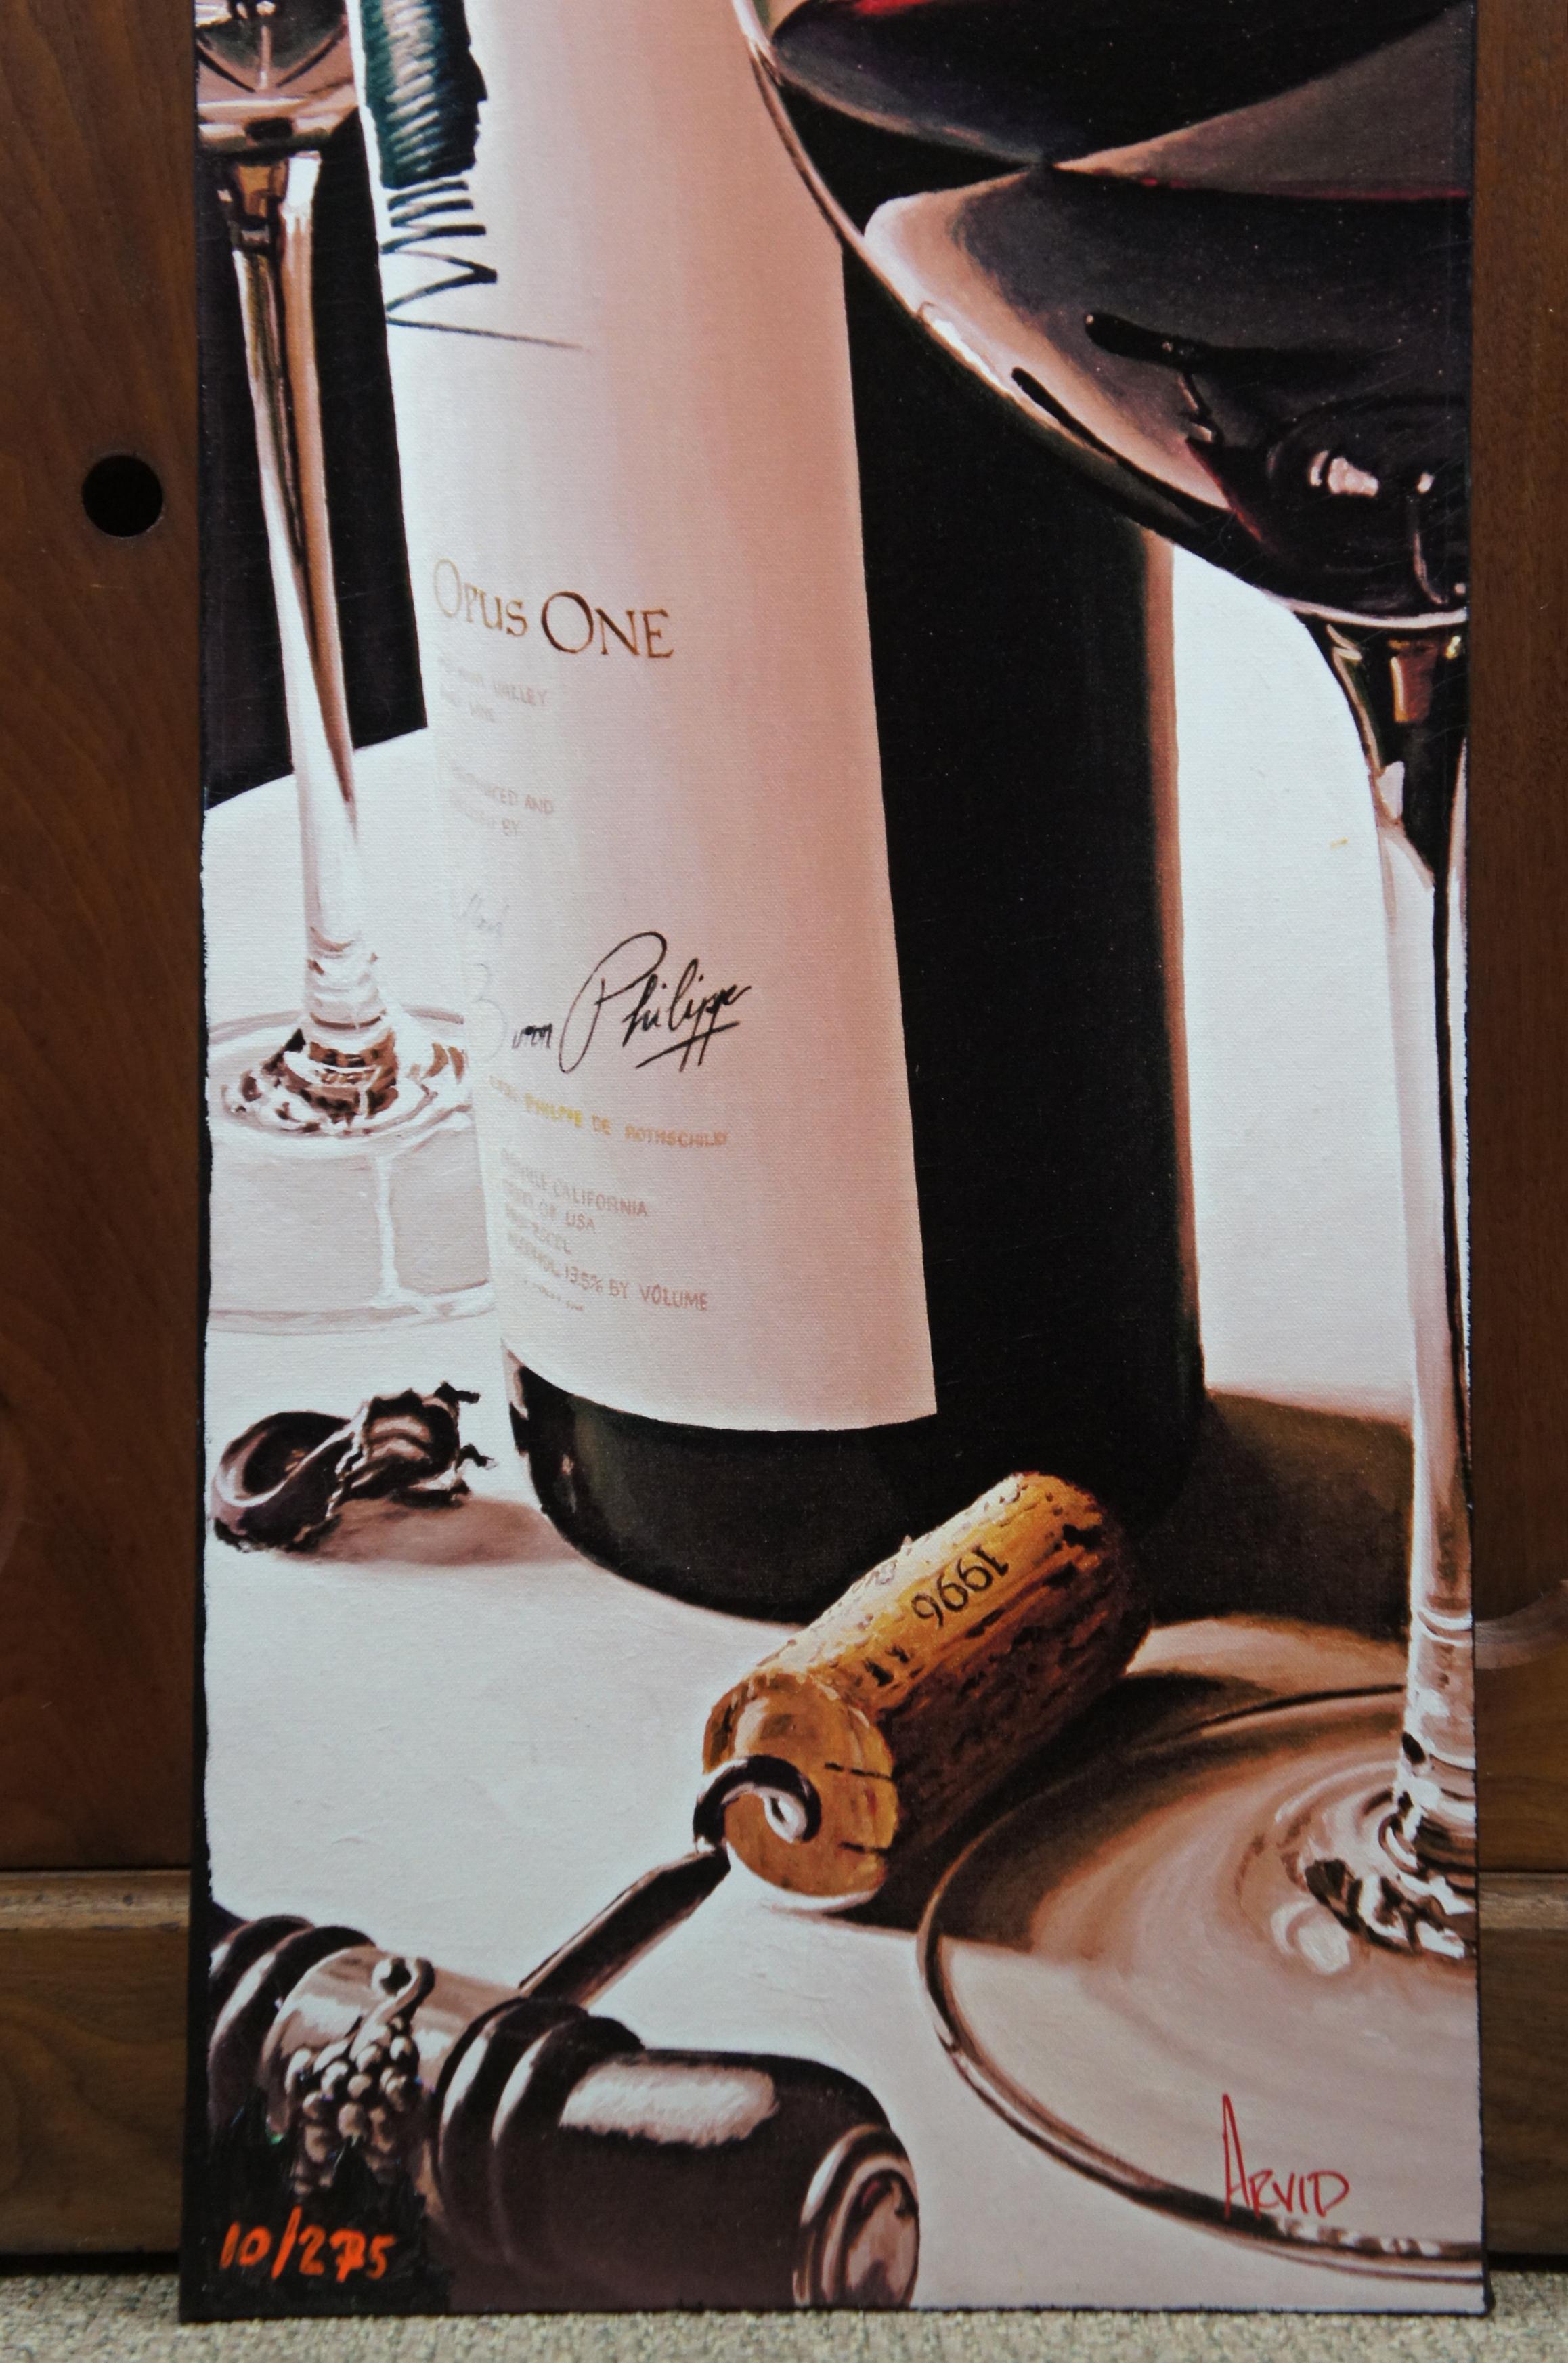 Thomas Arvid America’s Bordeaux Giclee on Canvas Opus One Wine 2